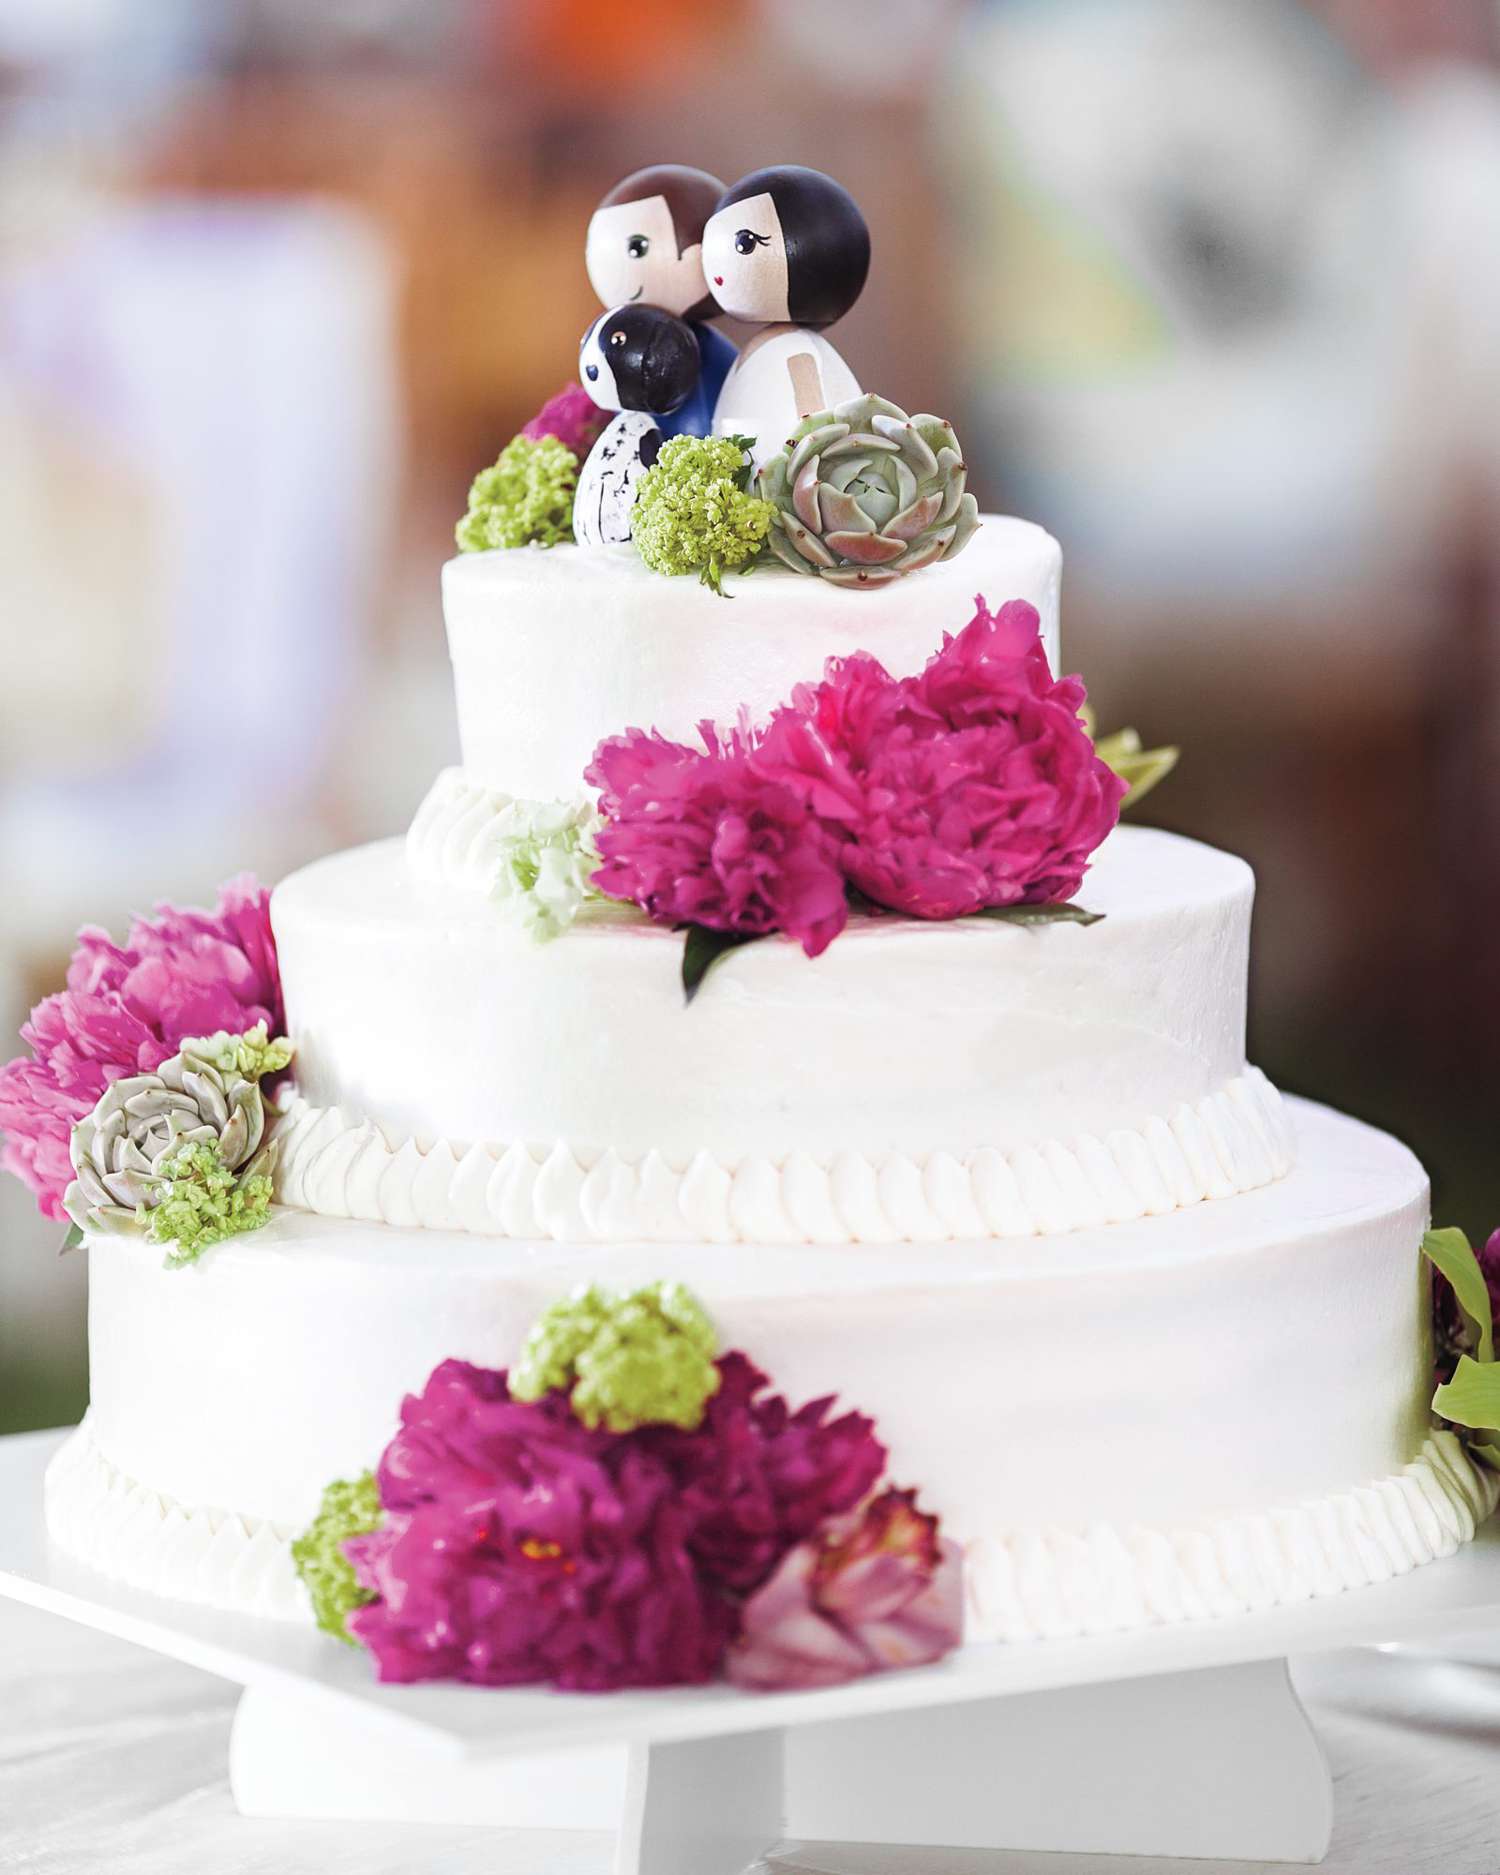 liz-and-michael-wedding-cake-5933-ds111296.jpg